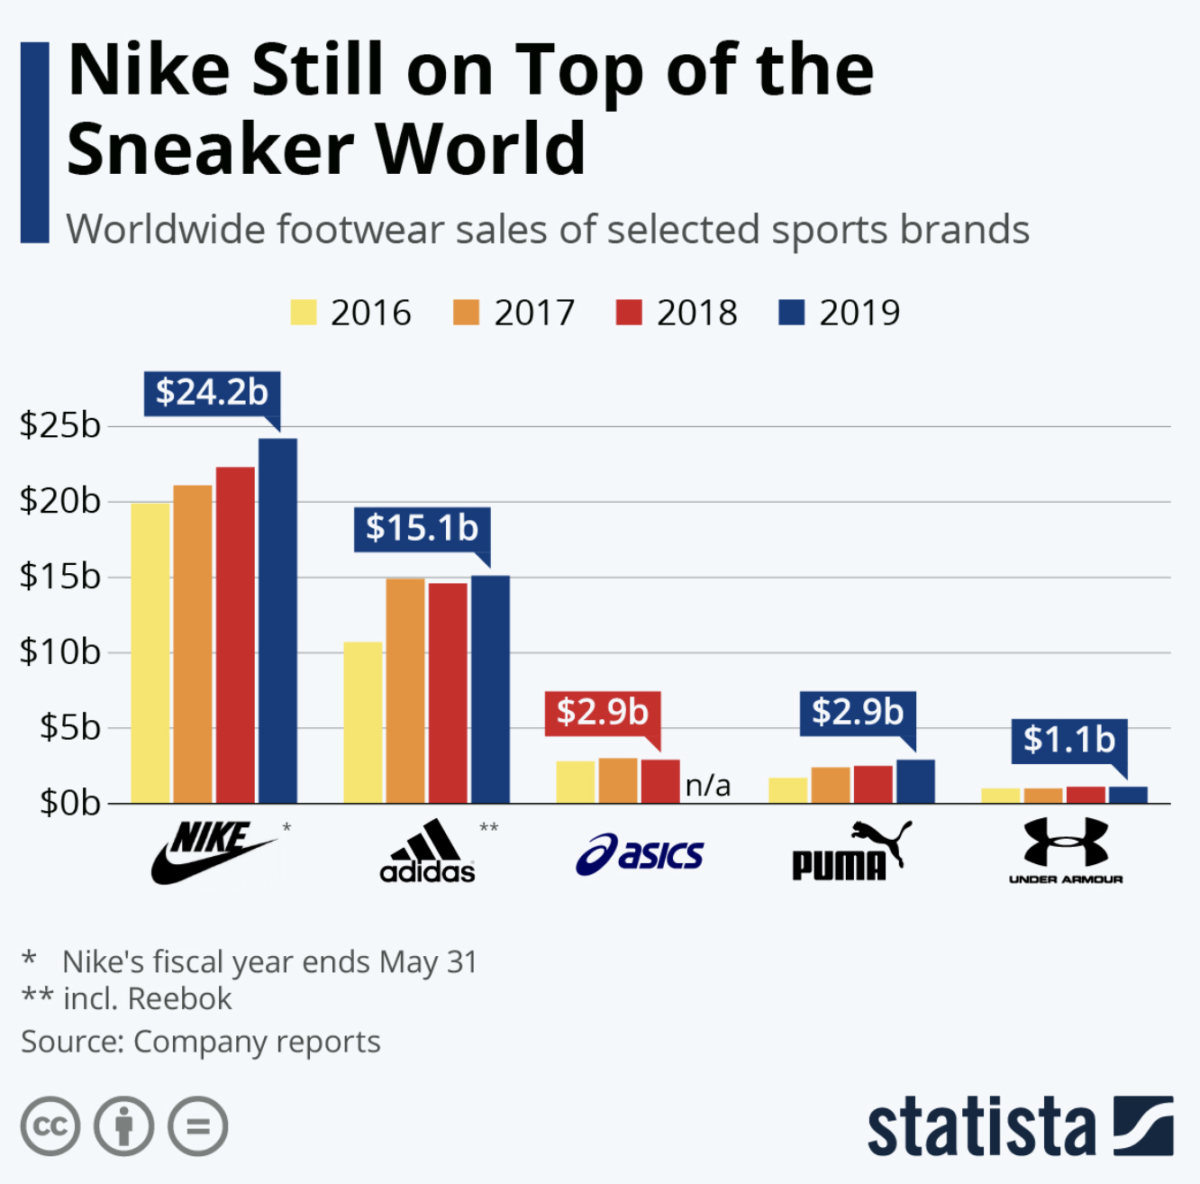 Global Branding Strategy Nike Analysis using 4 Ps Global Marketing